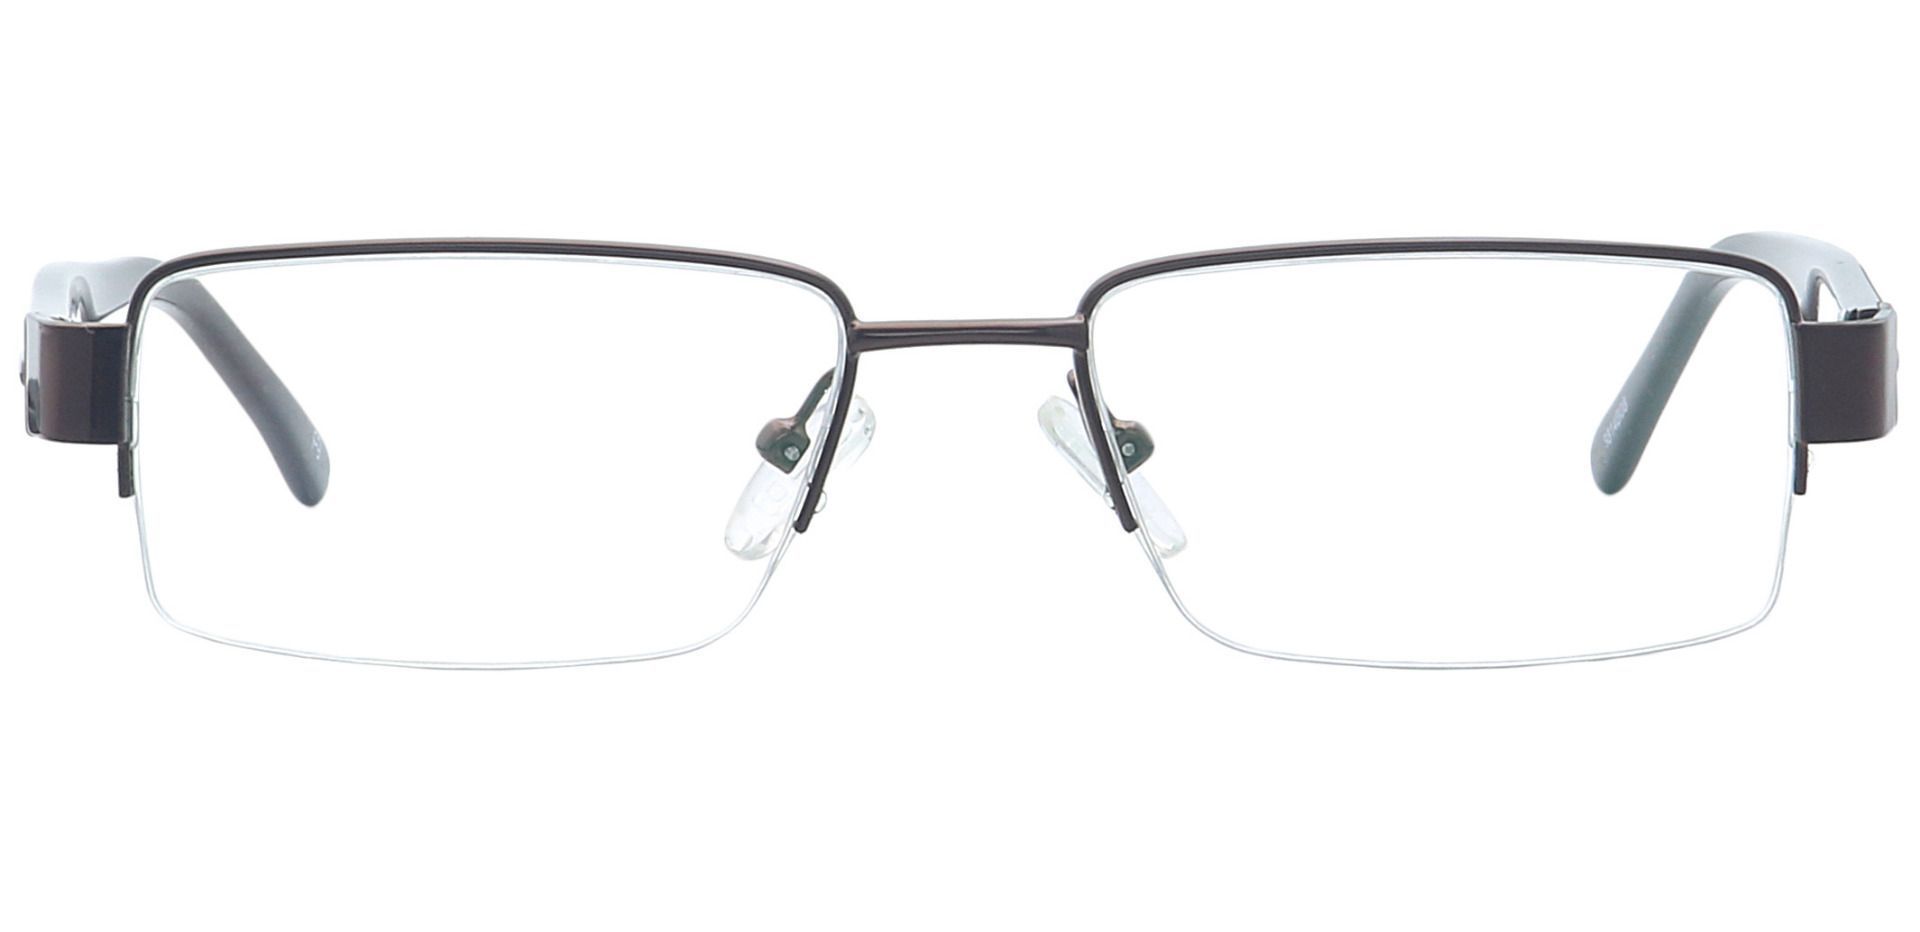 Roger Rectangle Lined Bifocal Glasses - Brown